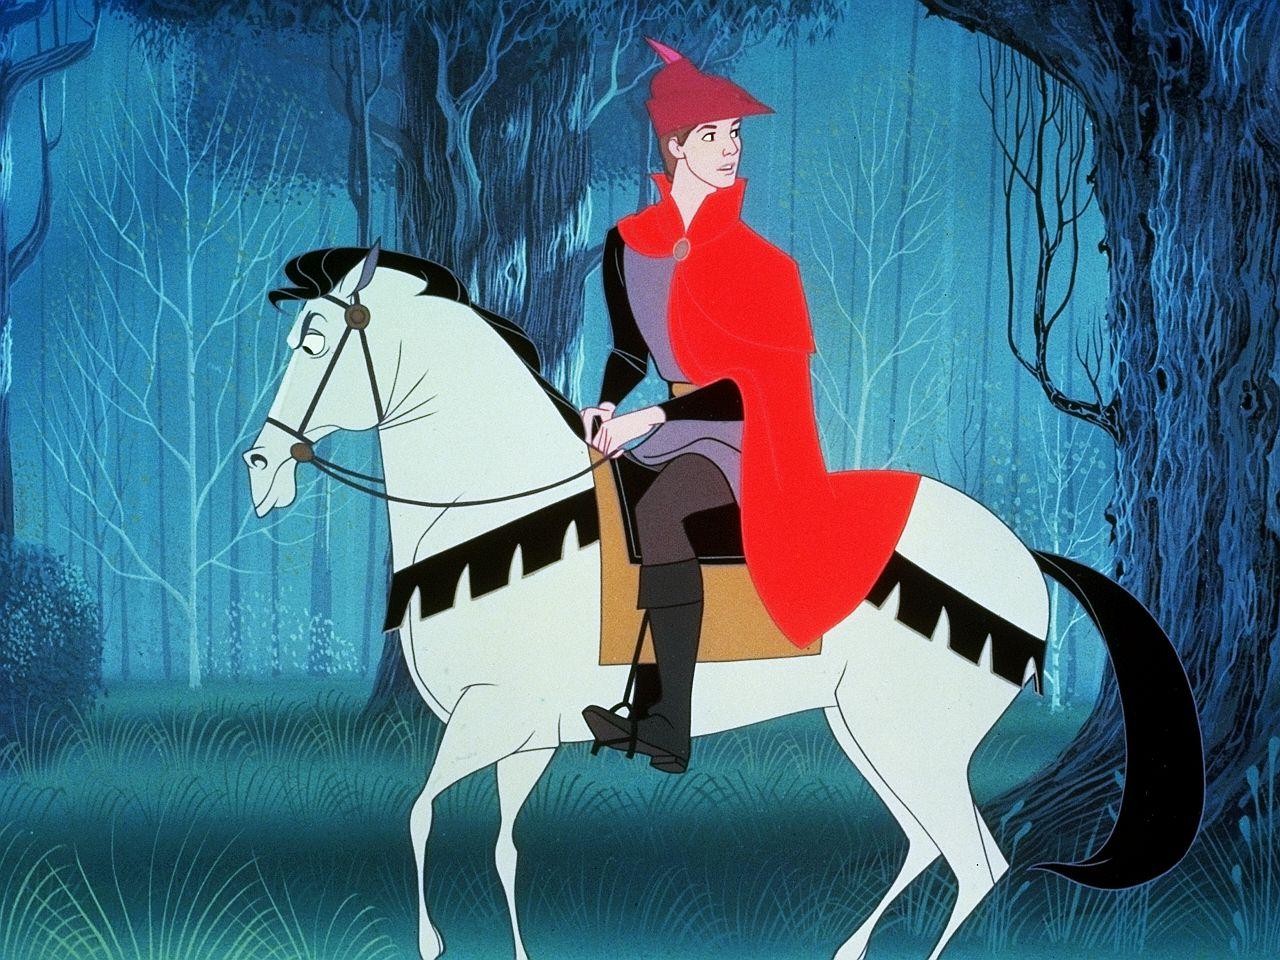 disney prince on horse